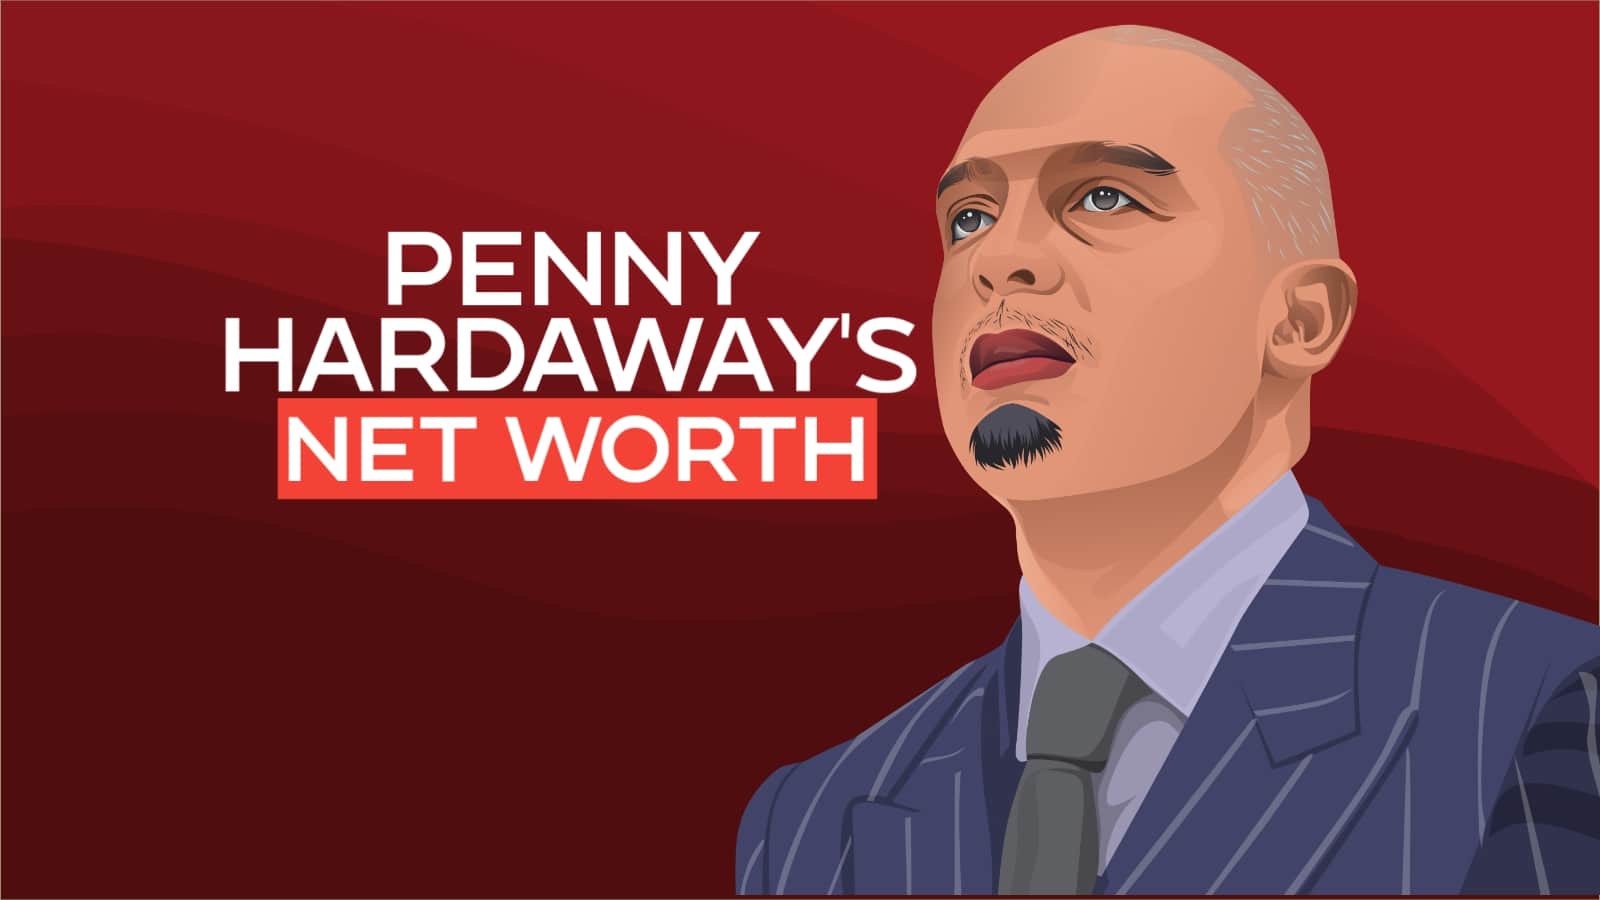 Penny Hardaway's Net Worth and Inspiring Story